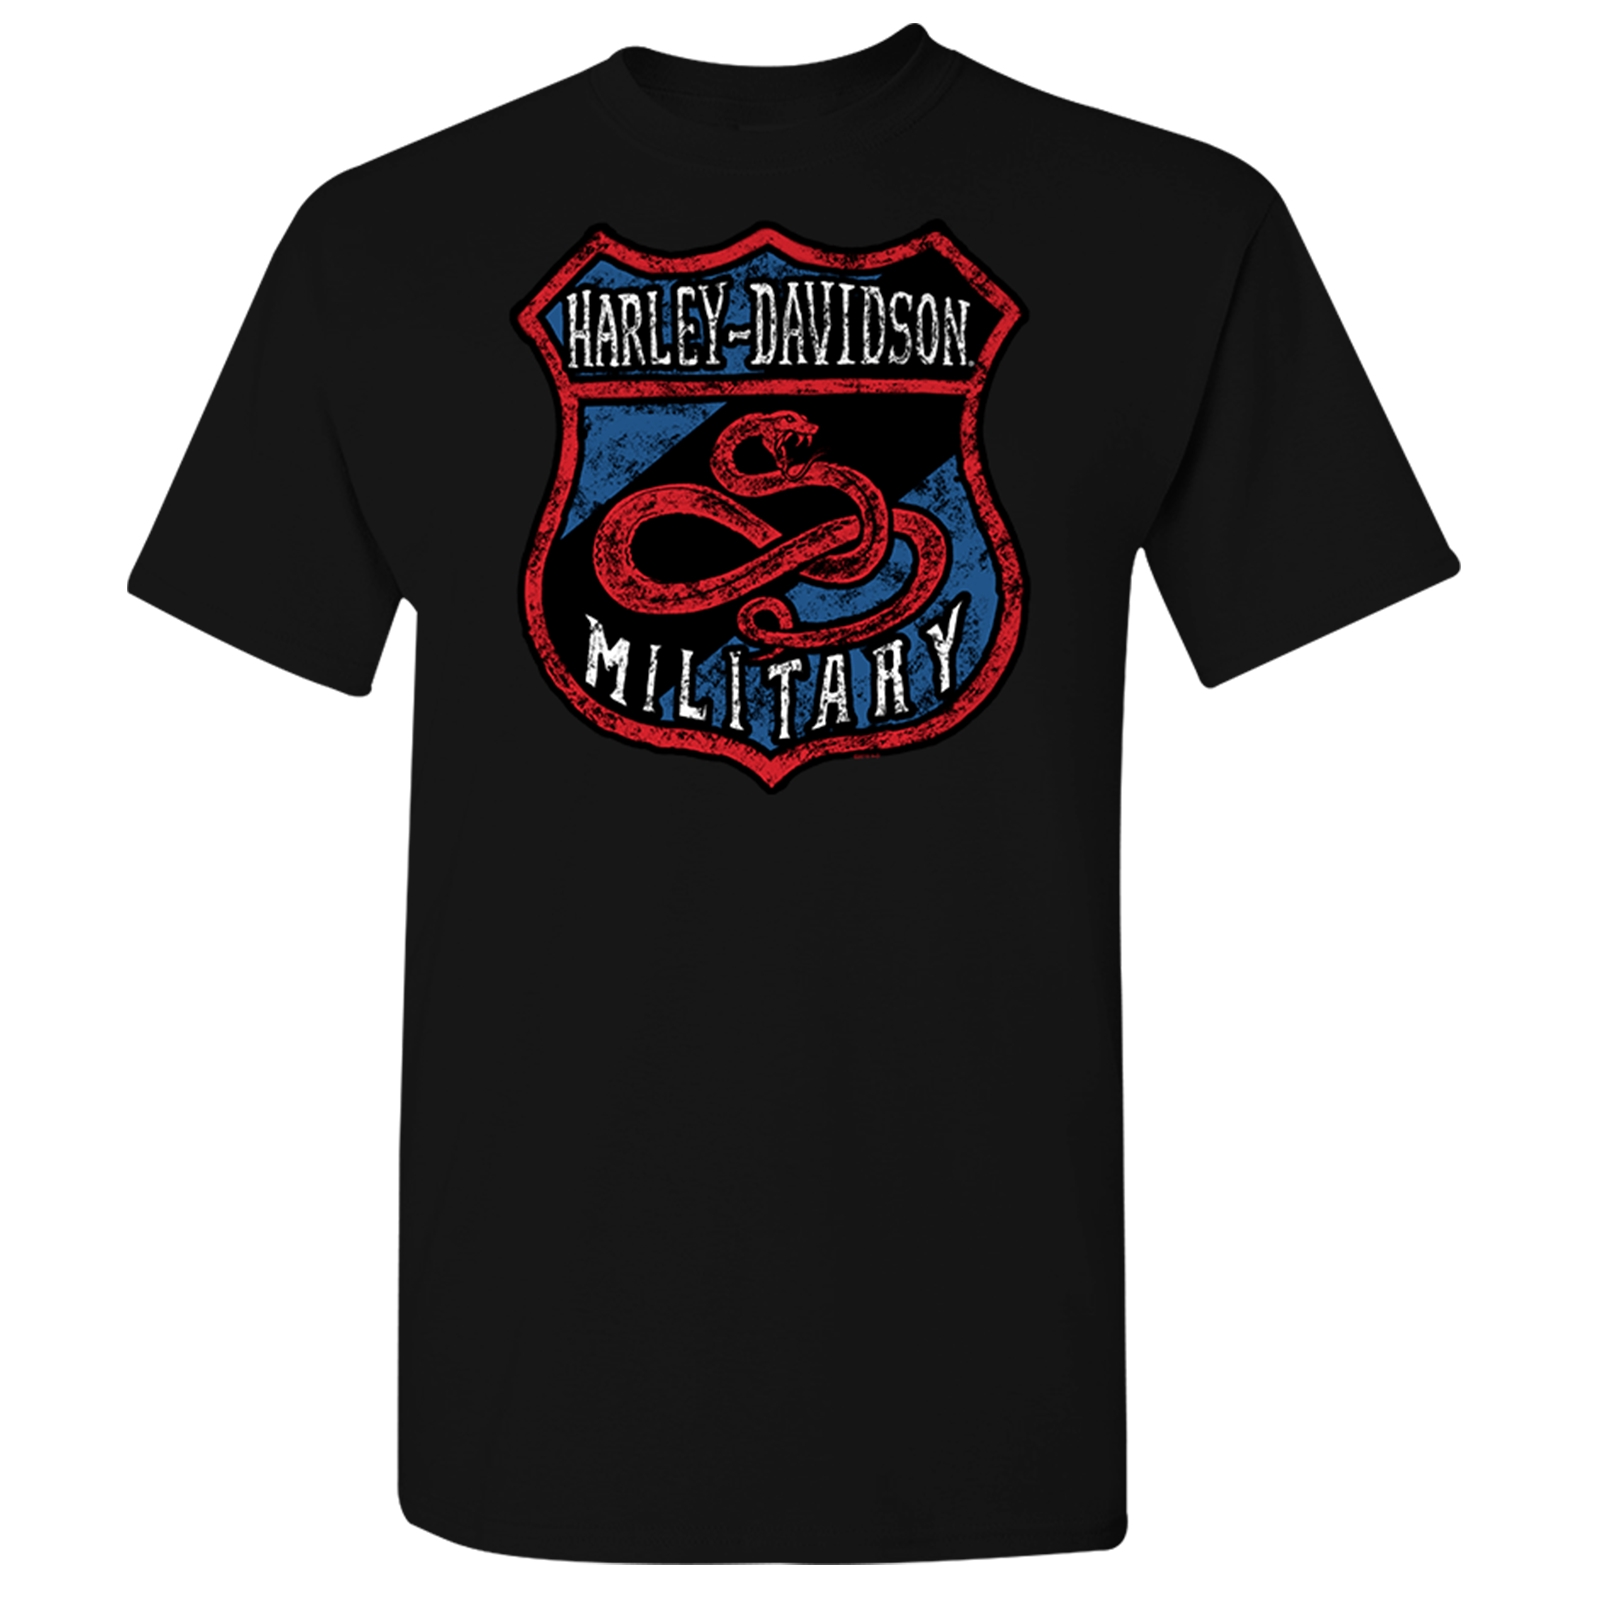 Harley-Davidson Military - Men's Black Graphic T-Shirt - Al Udeid Air Base | Snake Shield 3X